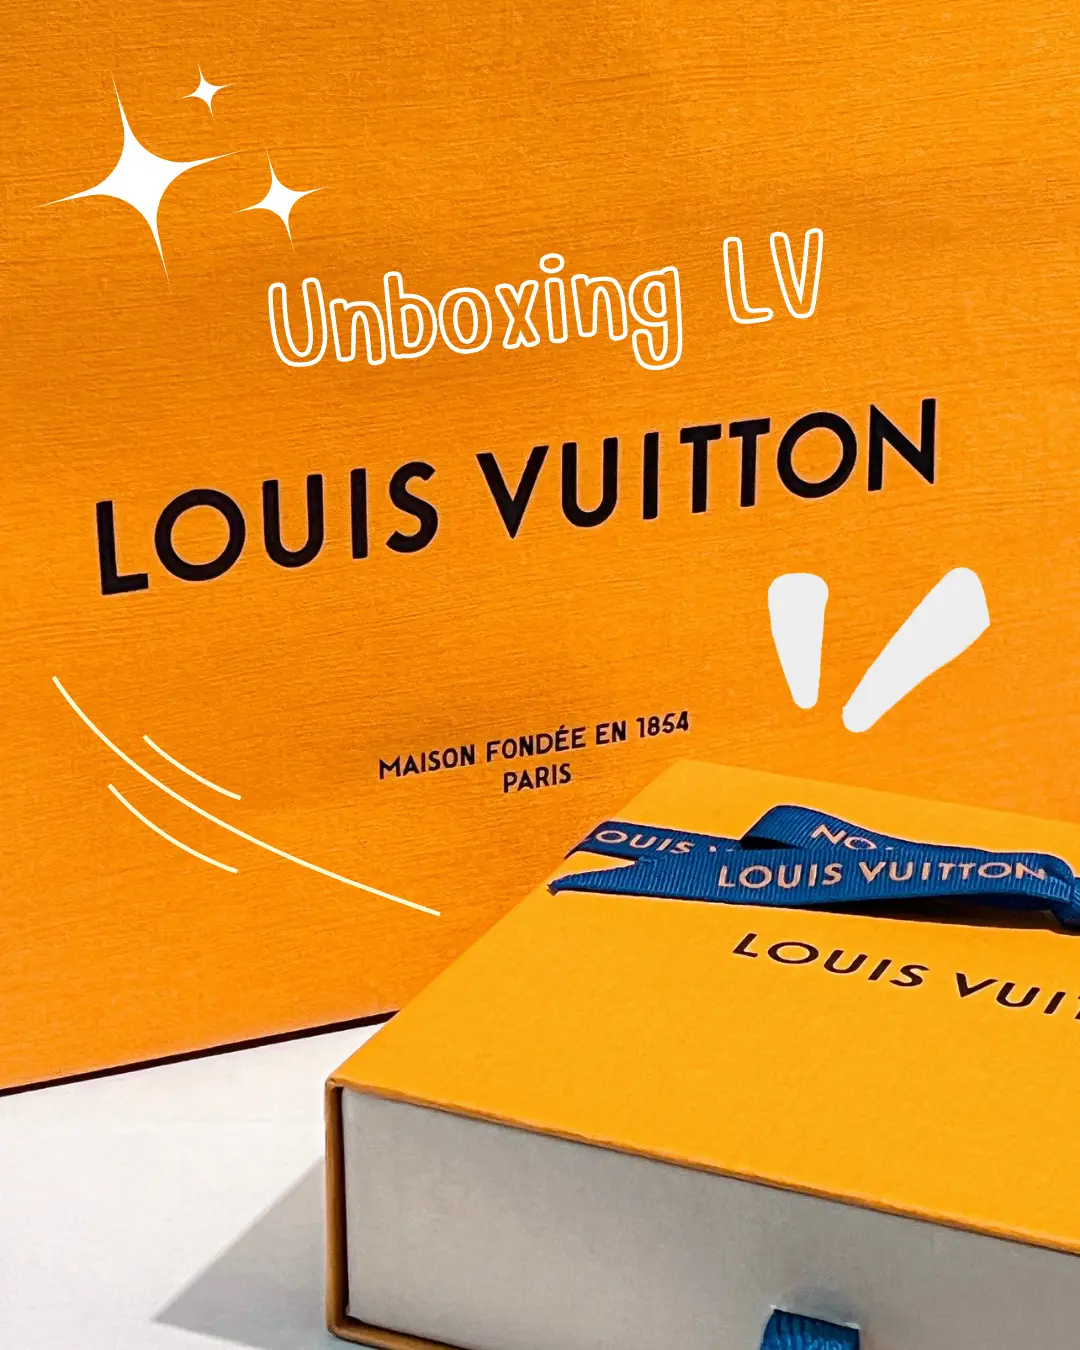 THE BAG REVIEW: UNBOXING LOUIS VUITTON CROISETTE IN DAMIER EBENE